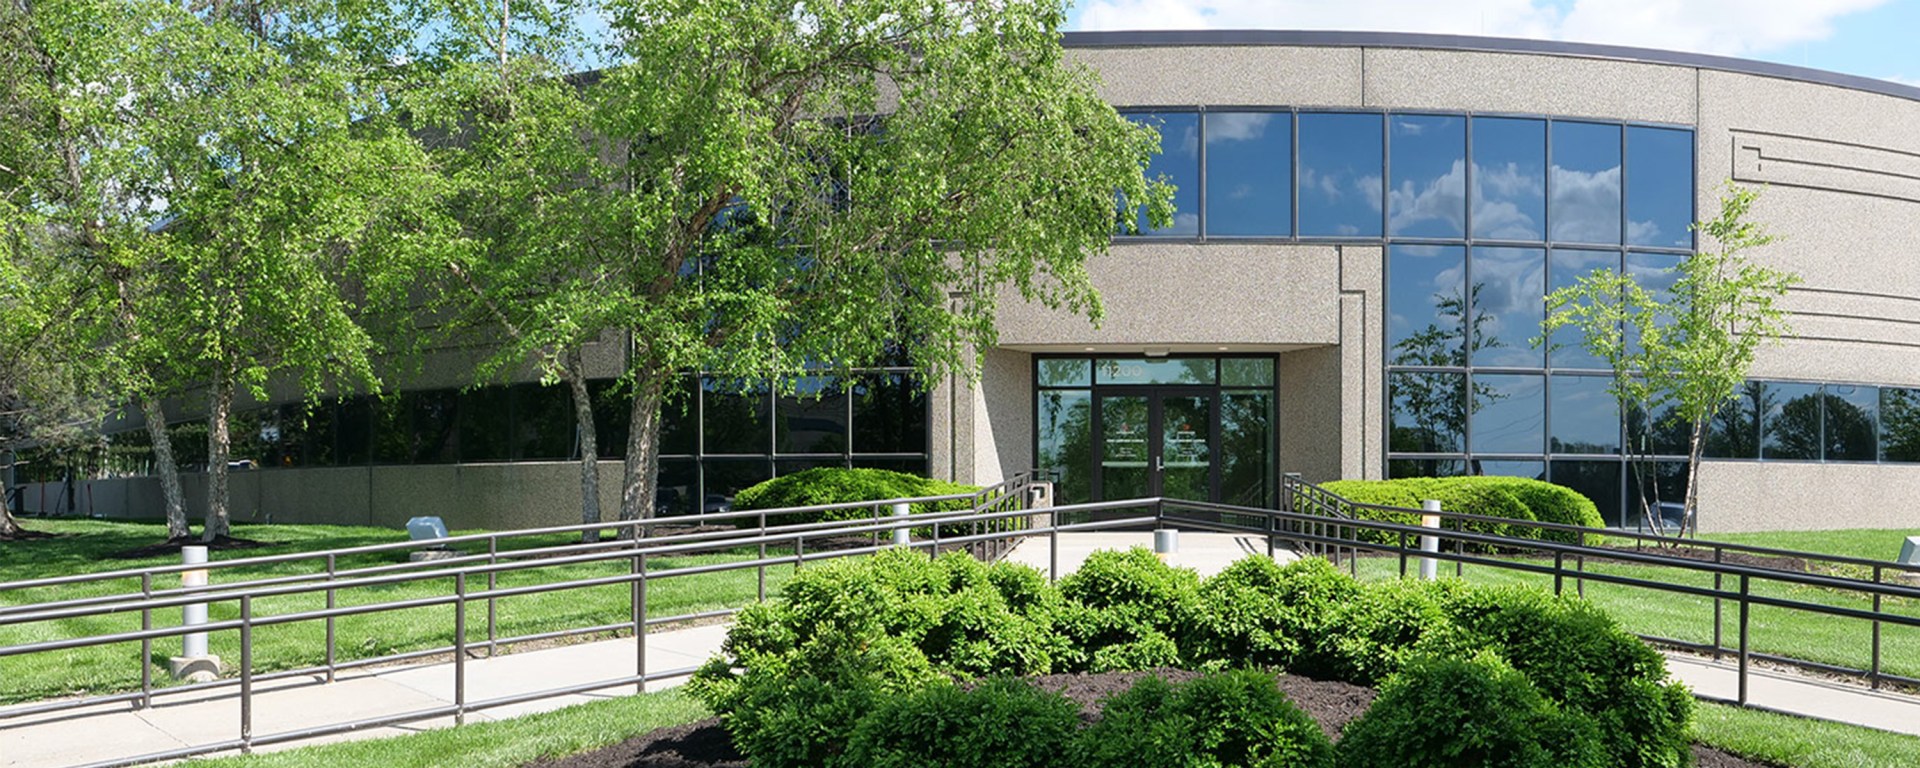 South Lake Campus Data Center